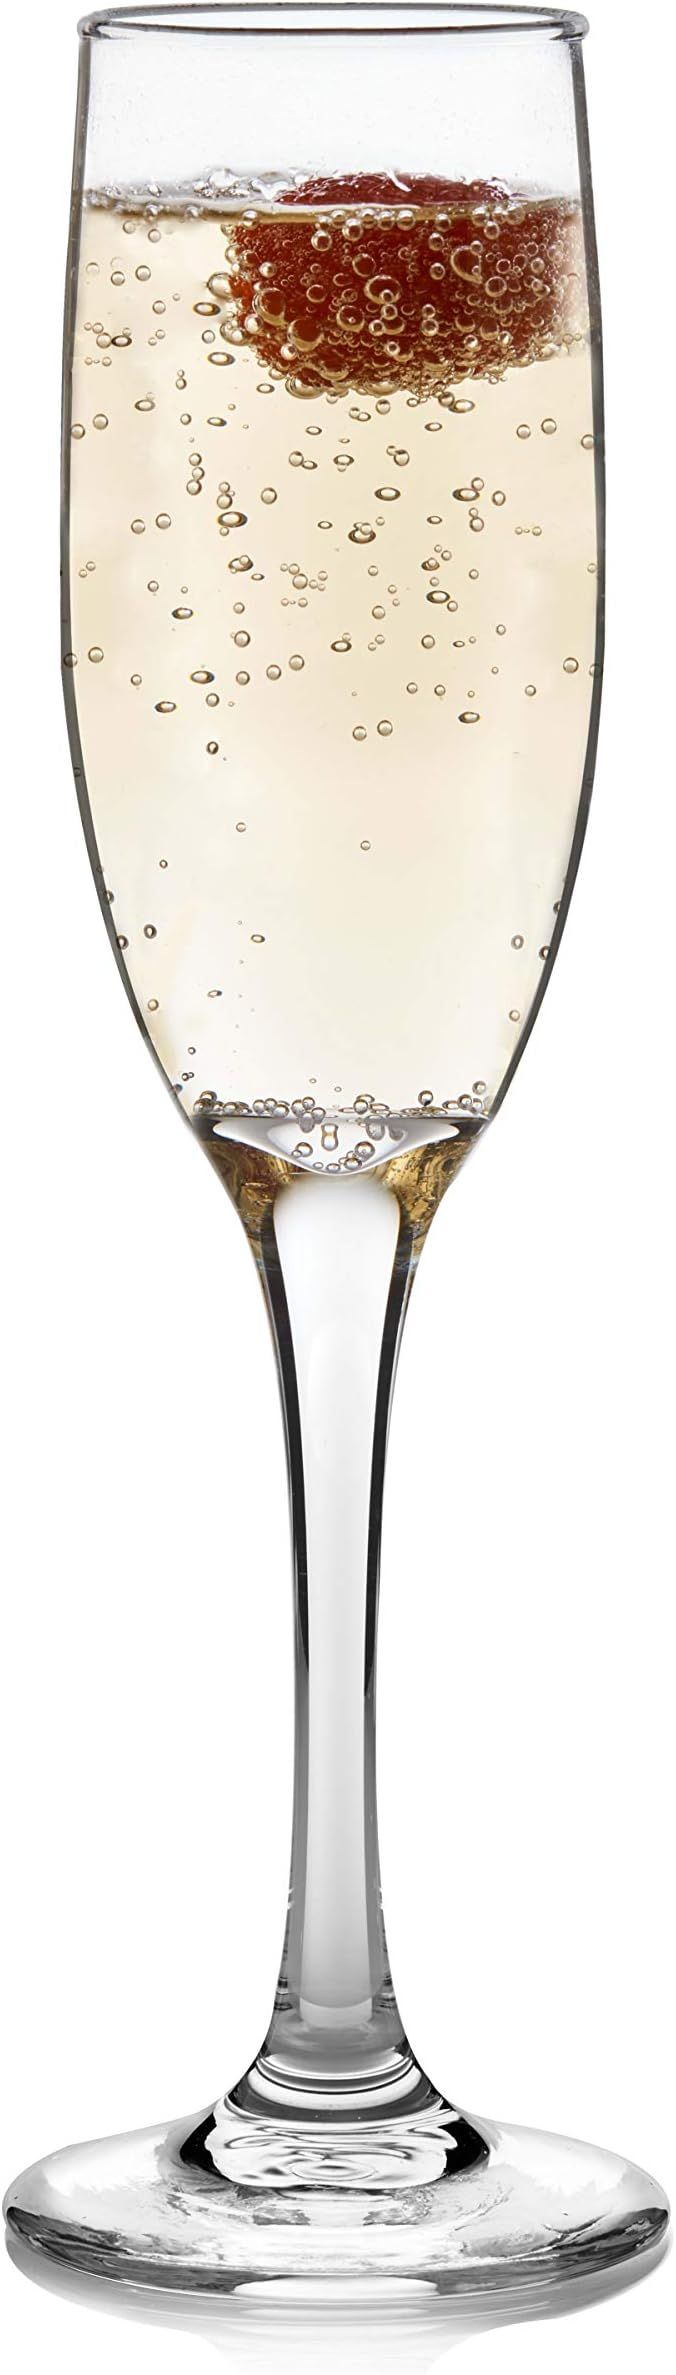 Libbey Claret Champagne Flute Glasses, Set of 8 | Amazon (US)